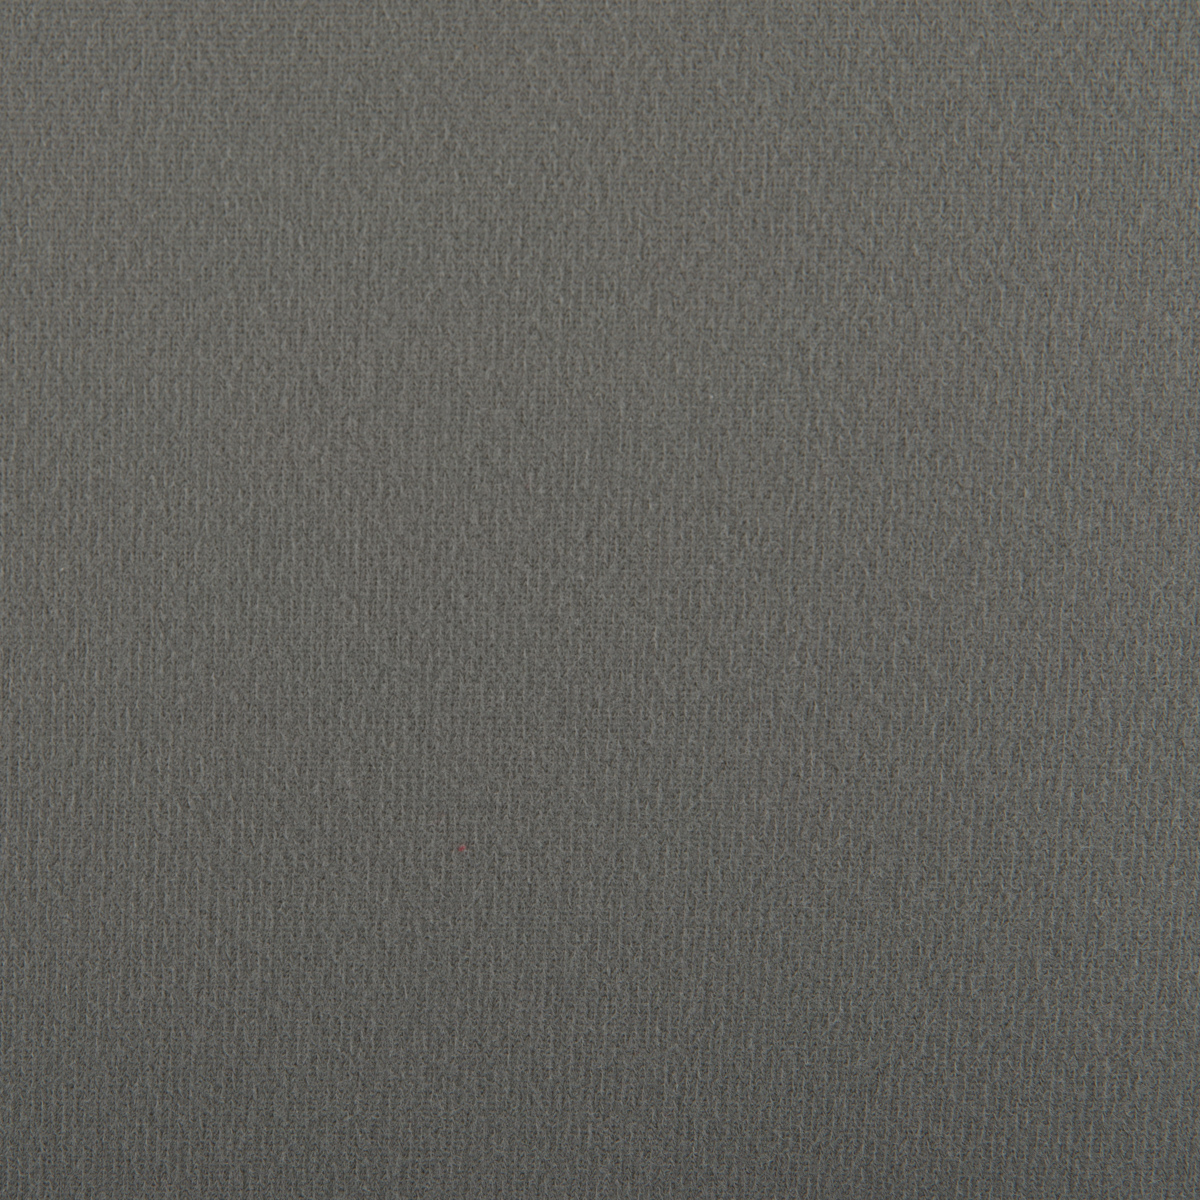 SL1808 Ox Gray, Headliner Fabric